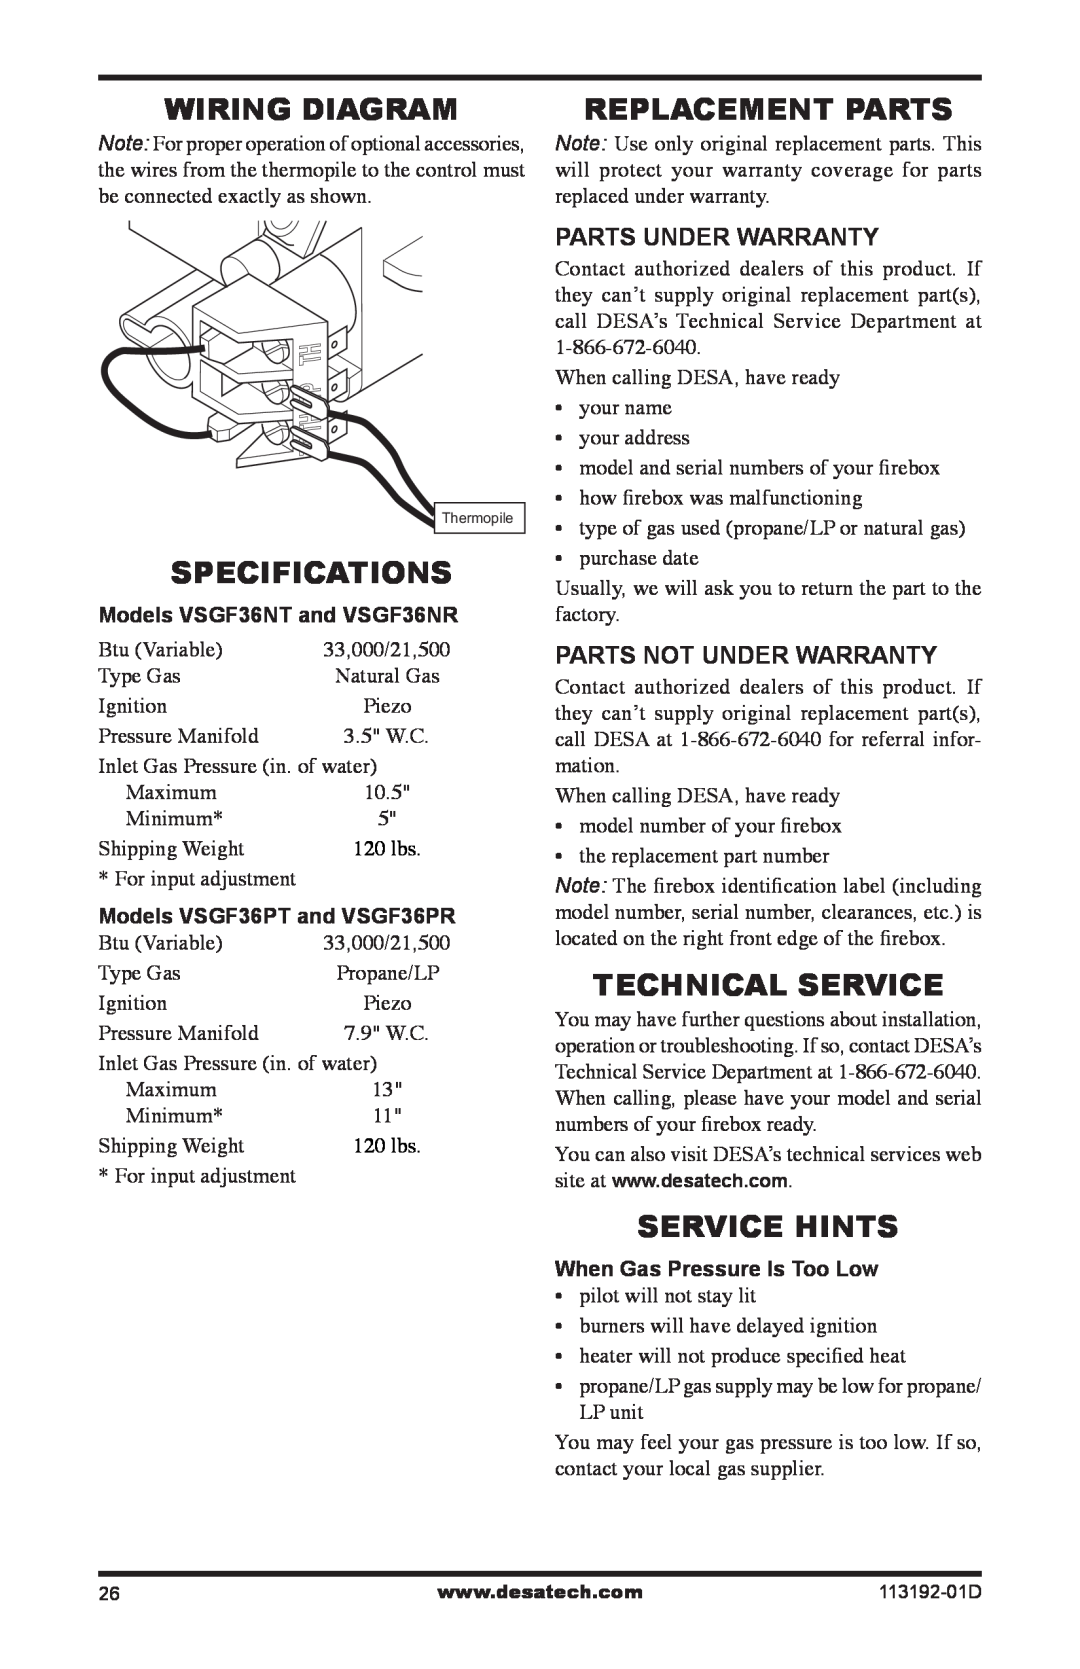 Desa VSGF36NR, VSGF36PR Wiring Diagram, Replacement Parts, Specifications, Technical Service, Service Hints 